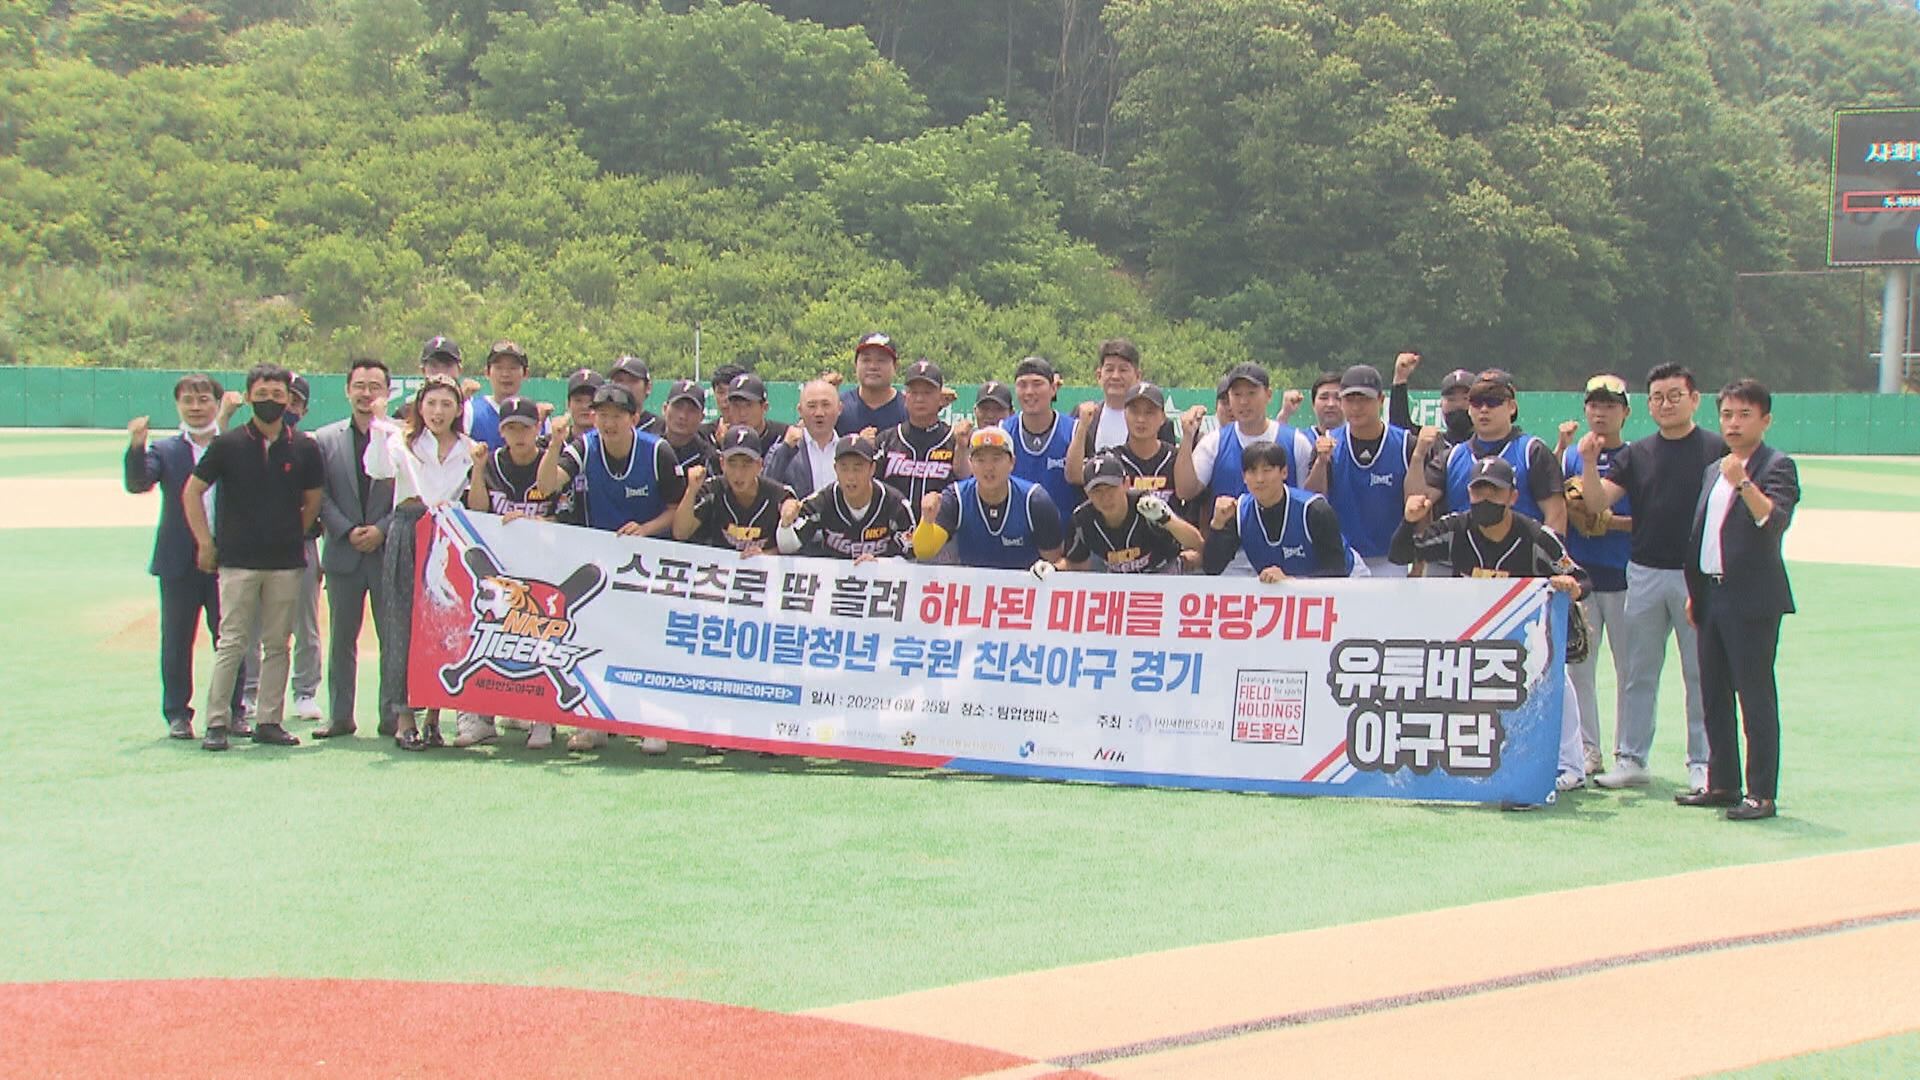 BASEBALL TEAM OF N.KOREAN DEFECTORS